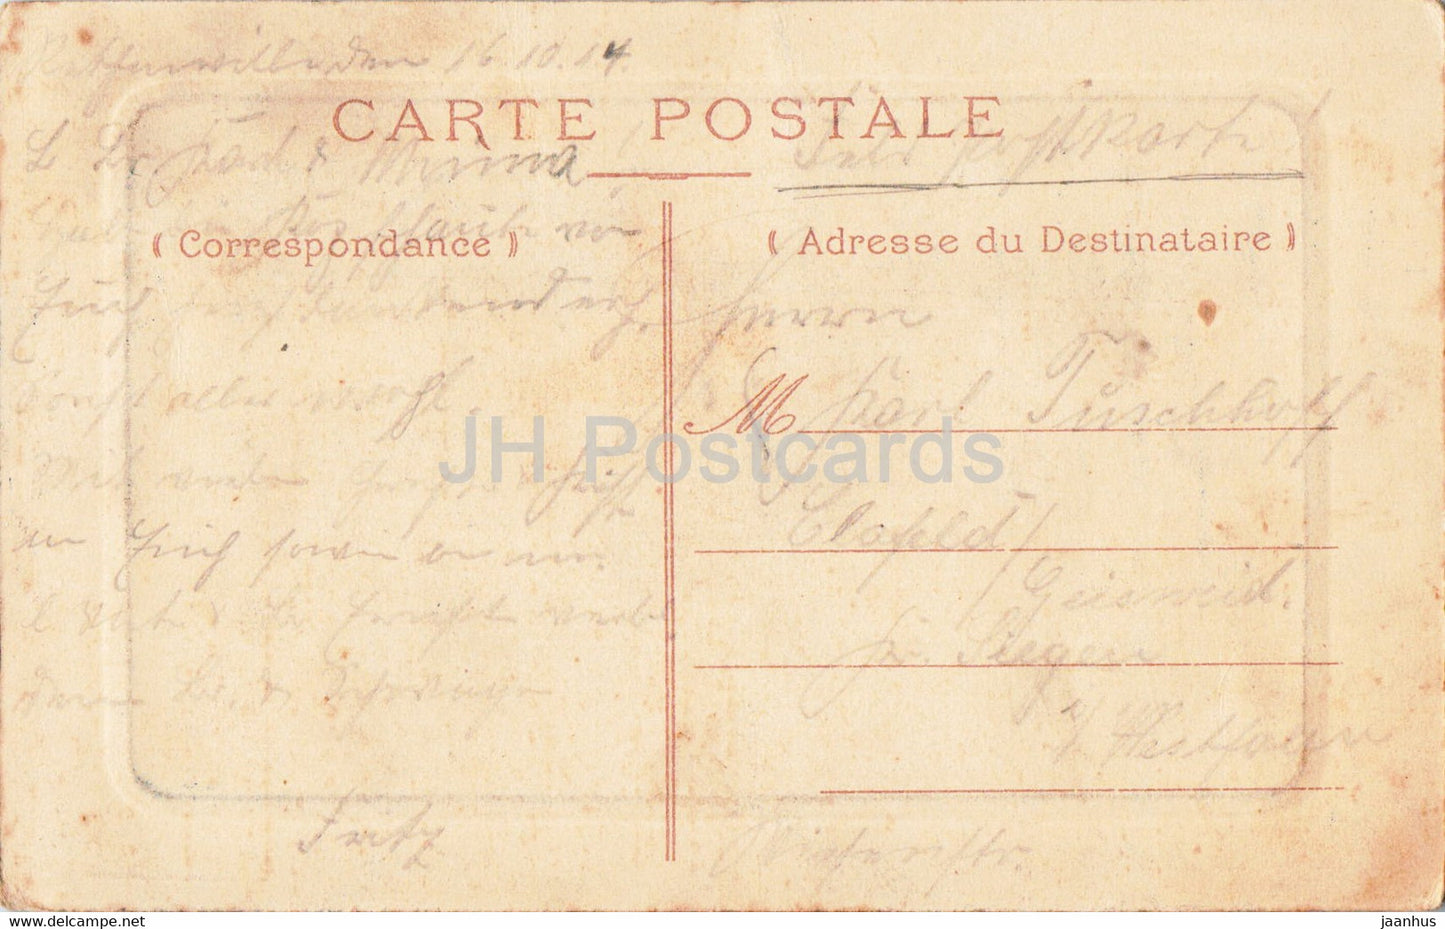 Boulogne sur Mer - Calle des Pecheurs - ship - boat - old postcard - 1917 - France - used